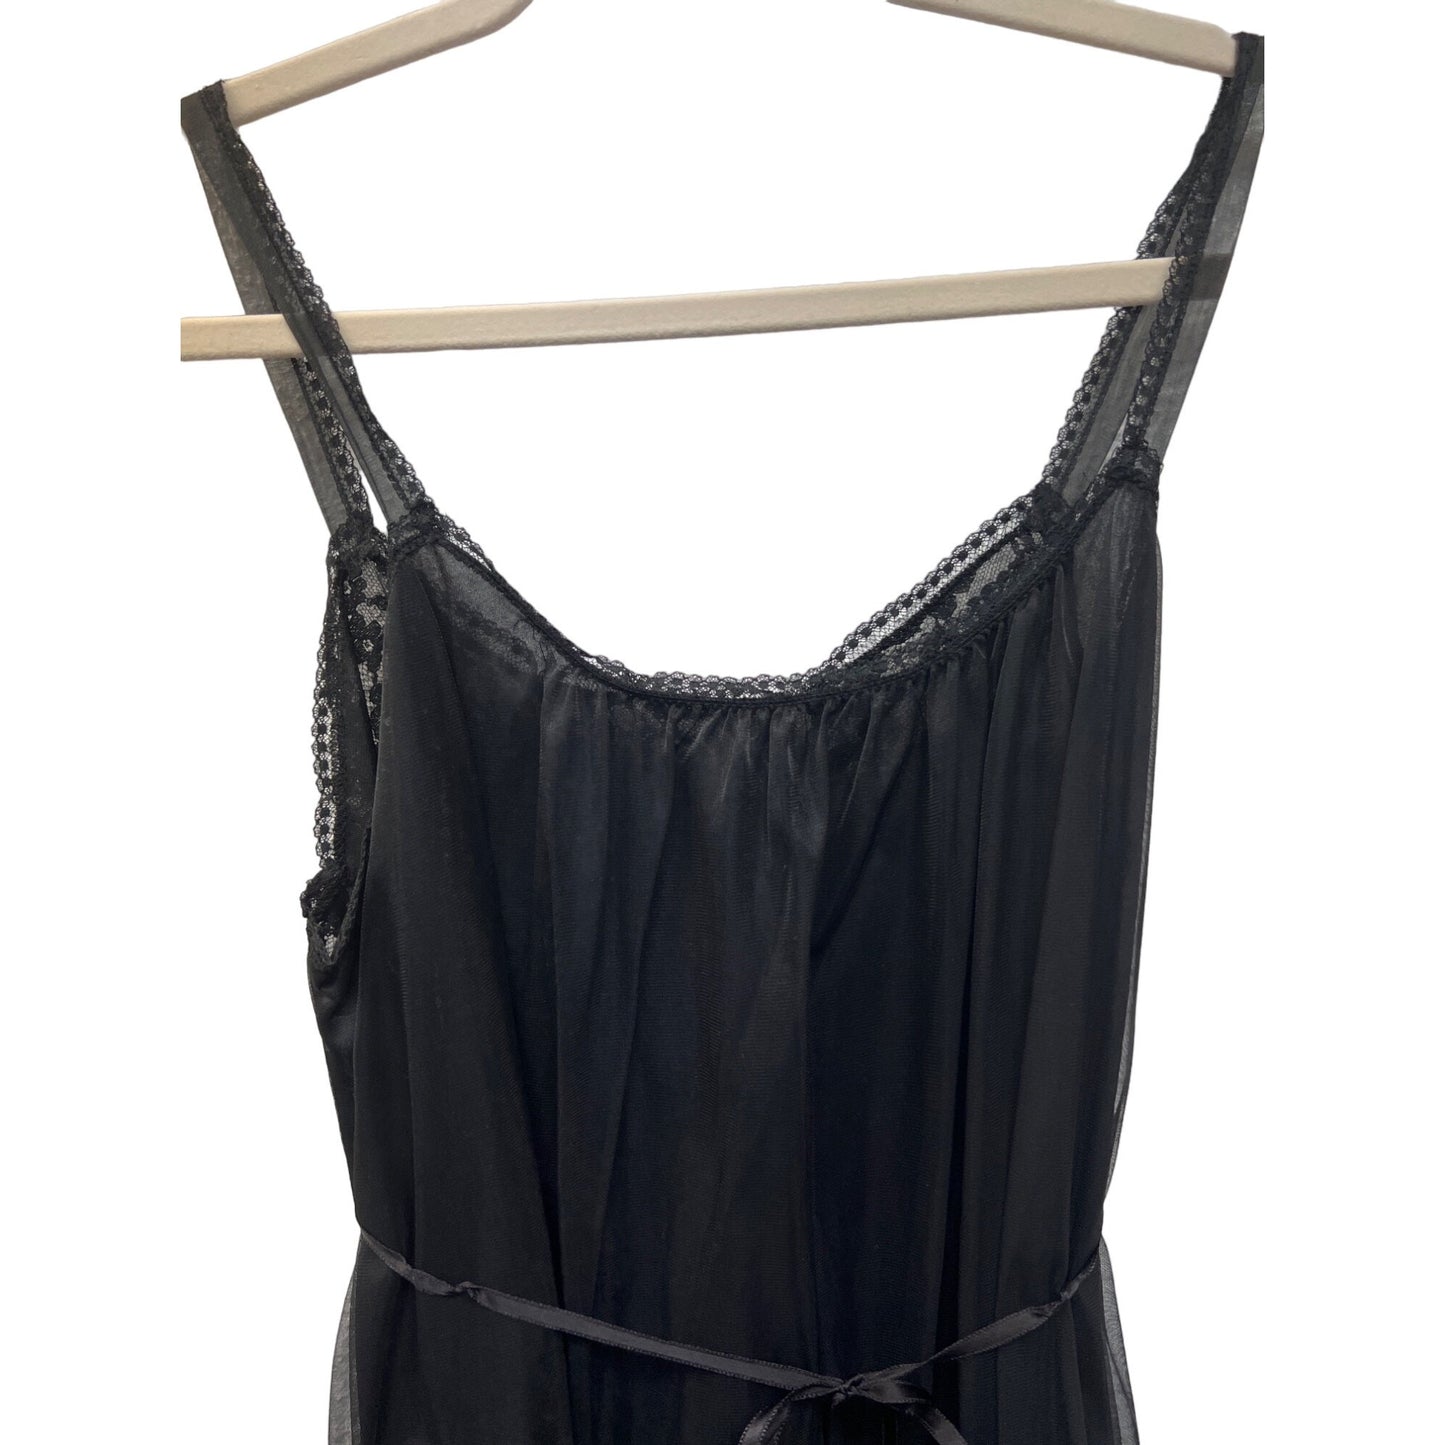 Kayser Vintage 50's Black Peignoir Nightgown Lingerie Set